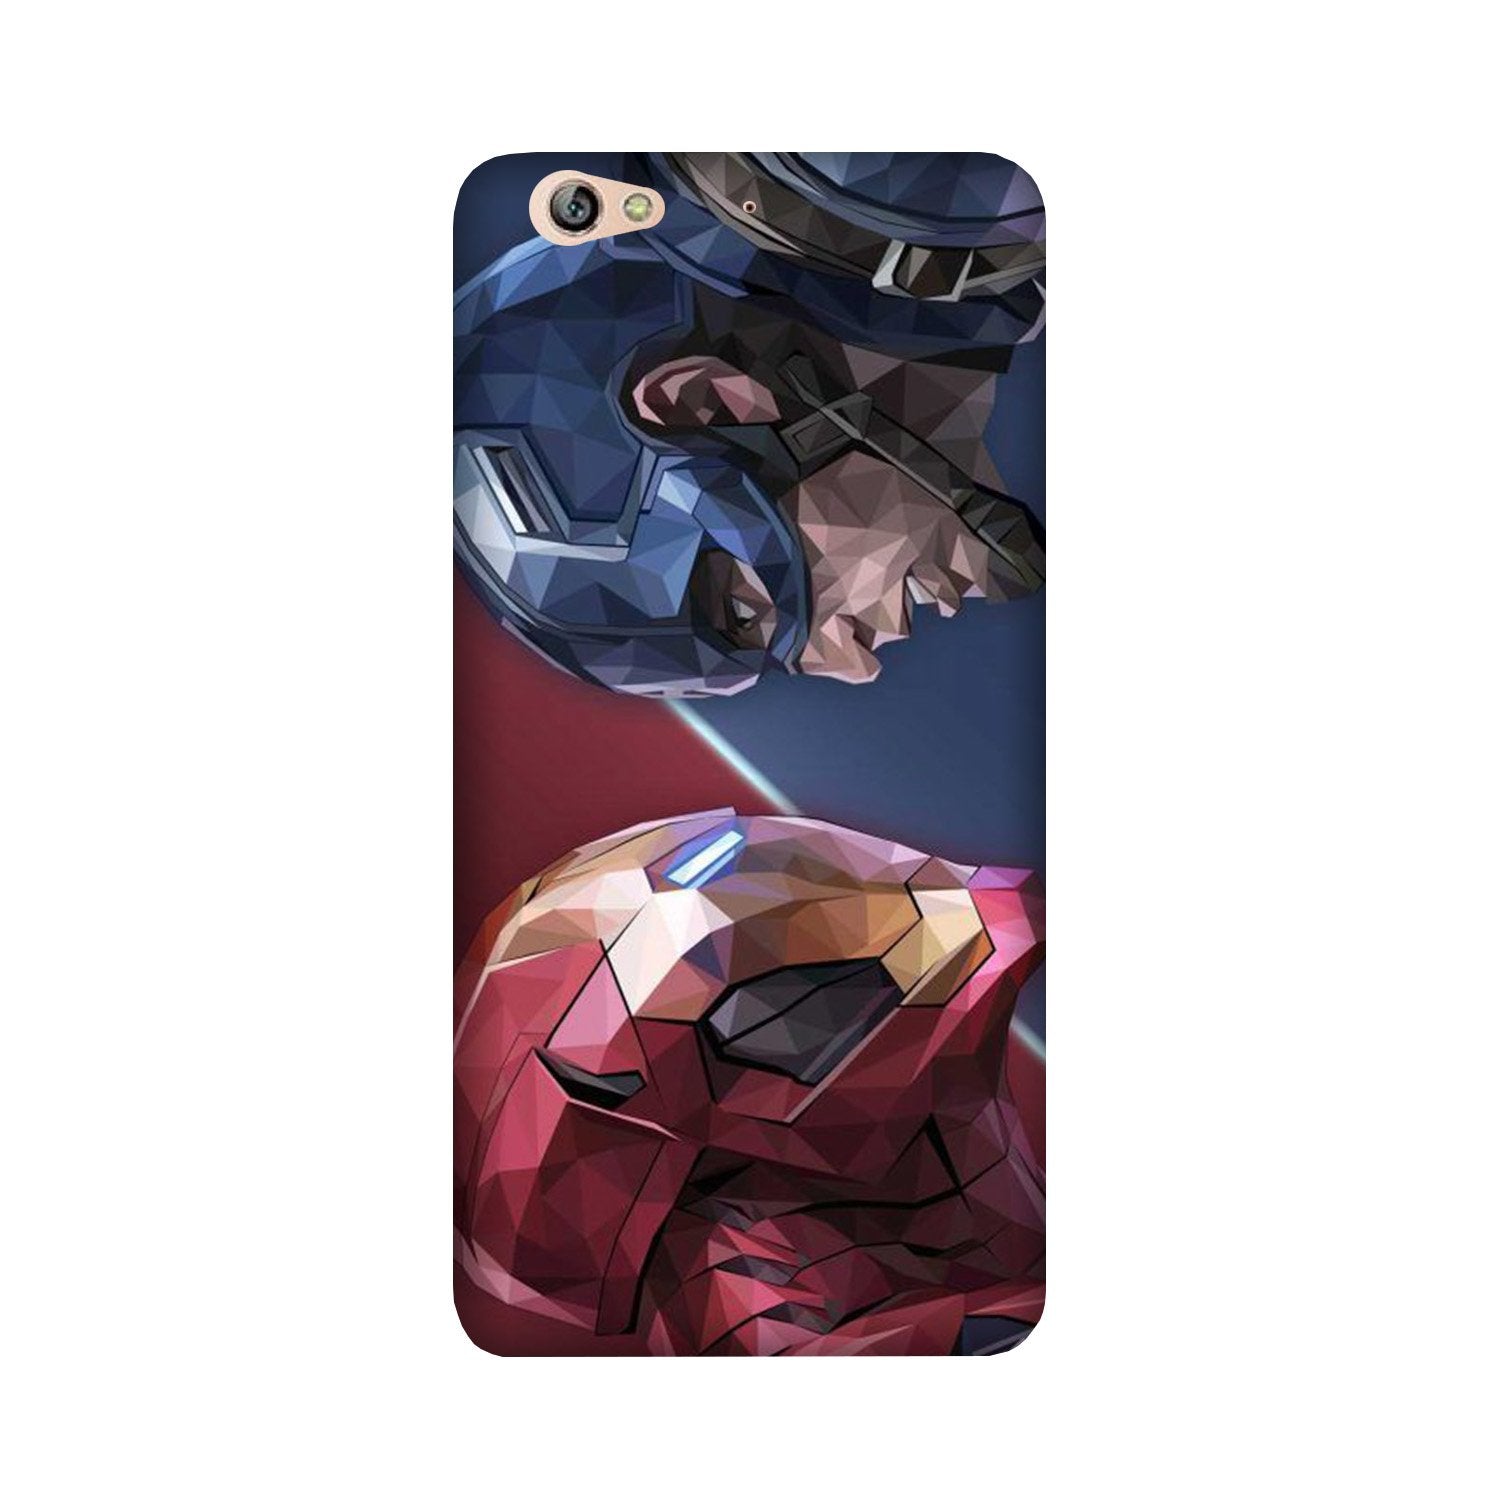 Ironman Captain America Case for Gionee S6 (Design No. 245)